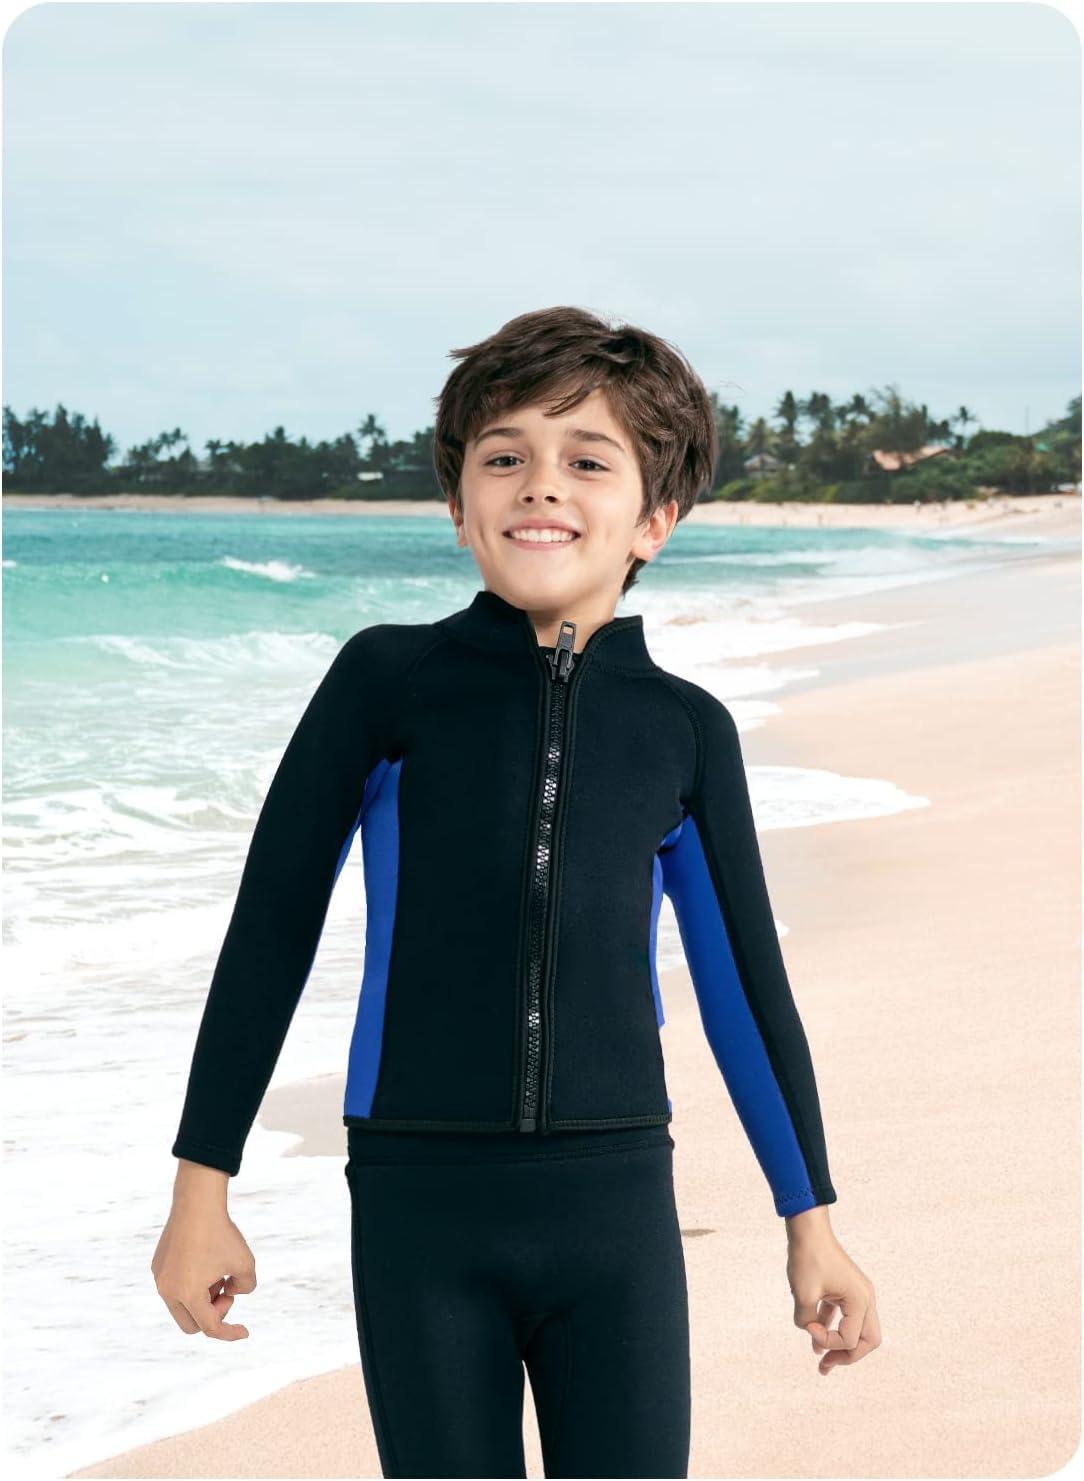 REALON Wetsuit Top Men 3mm Neoprene Womens Kids Jacket Long Sleeves Front  Zipper Wet Suit 2mm for Surfing Diving Swimming Snorkeling Kayaking black &  blue 8